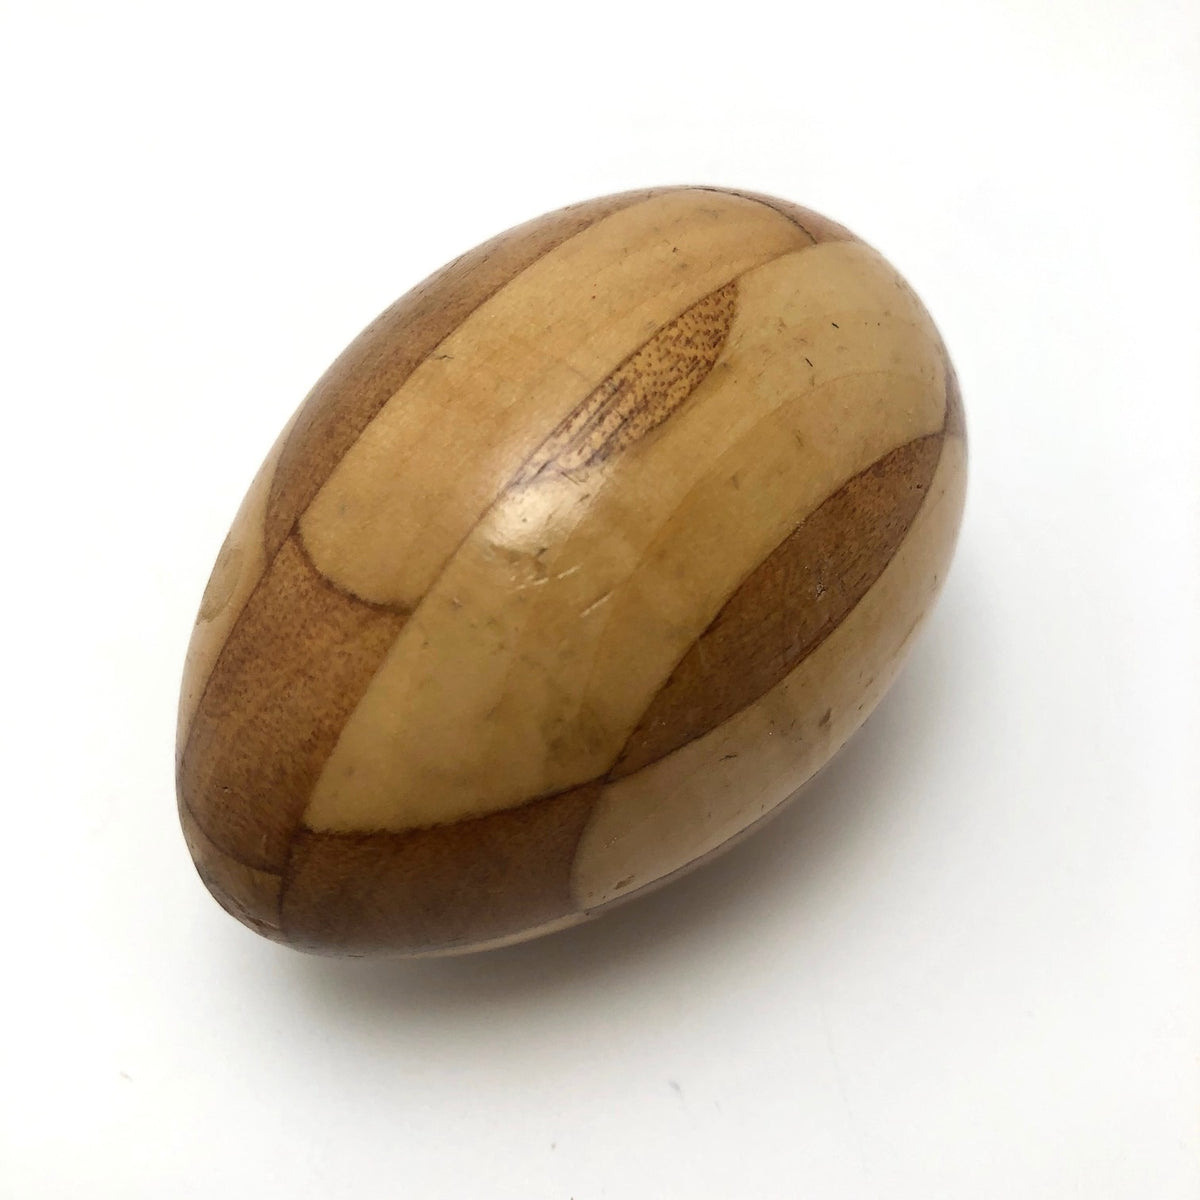 Wooden Darning Egg - 3073641753892